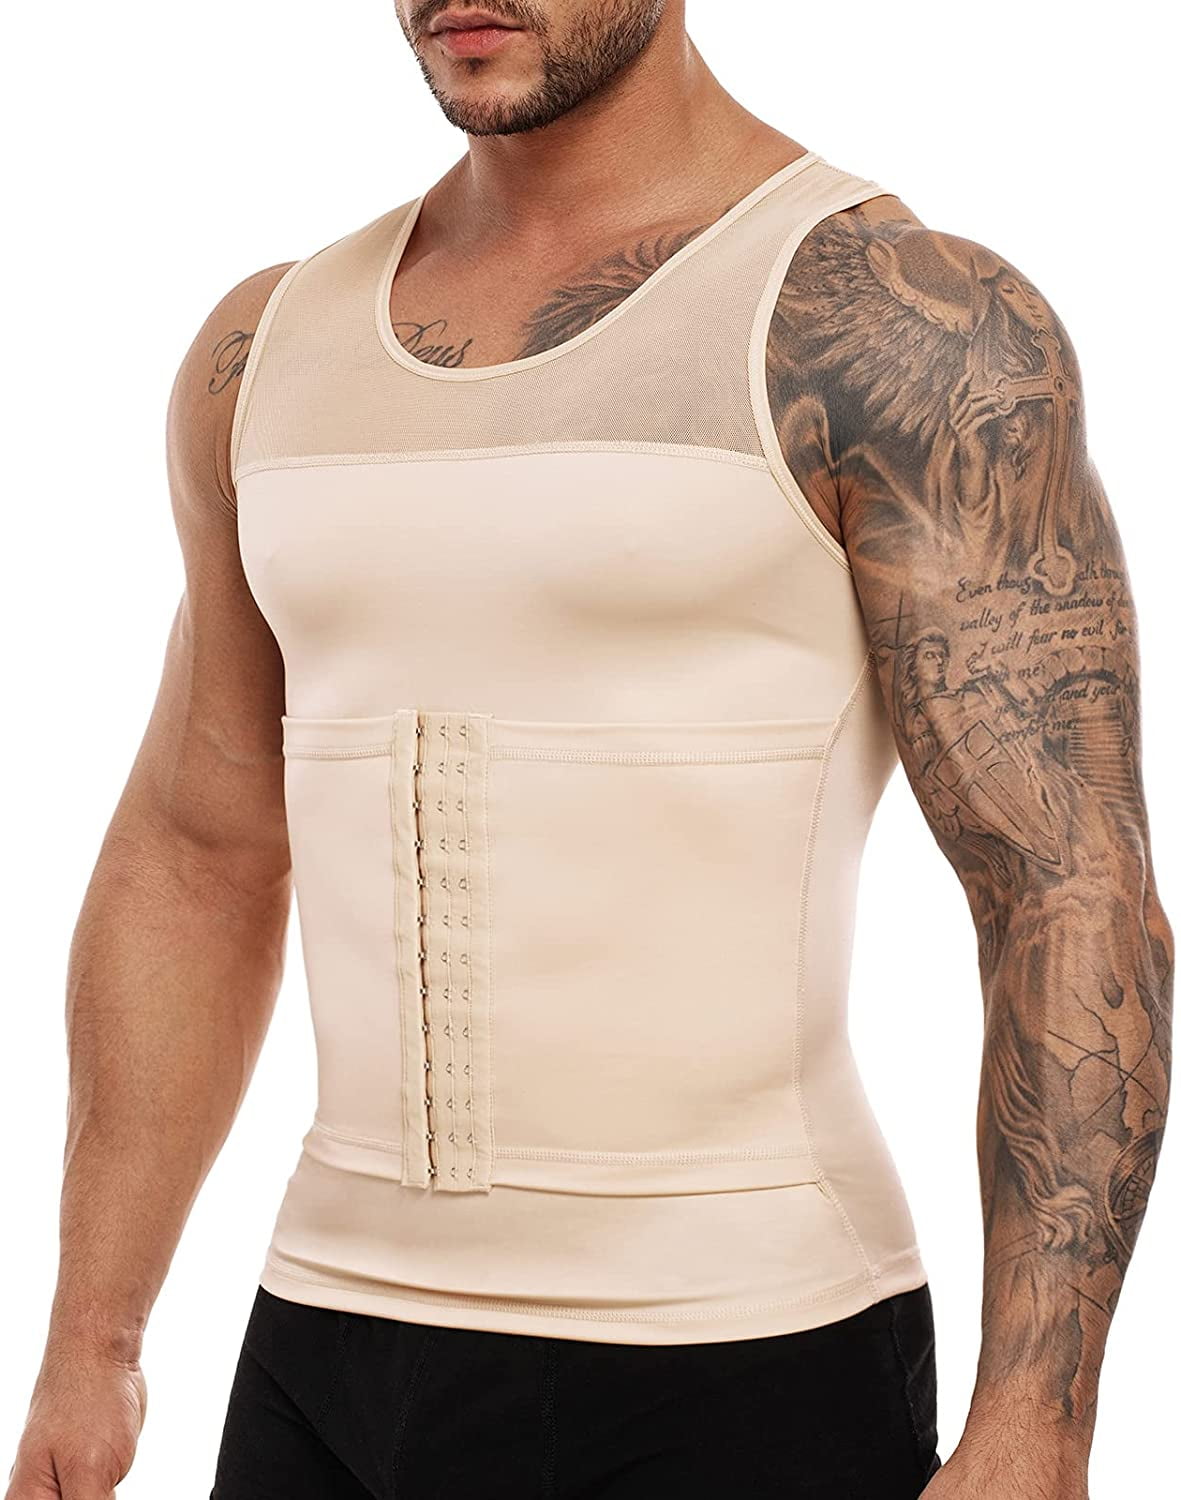  Customer reviews: Gotoly Men Compression Shirt Shapewear  Slimming Body Shaper Vest Undershirt Tummy Control Tank Top